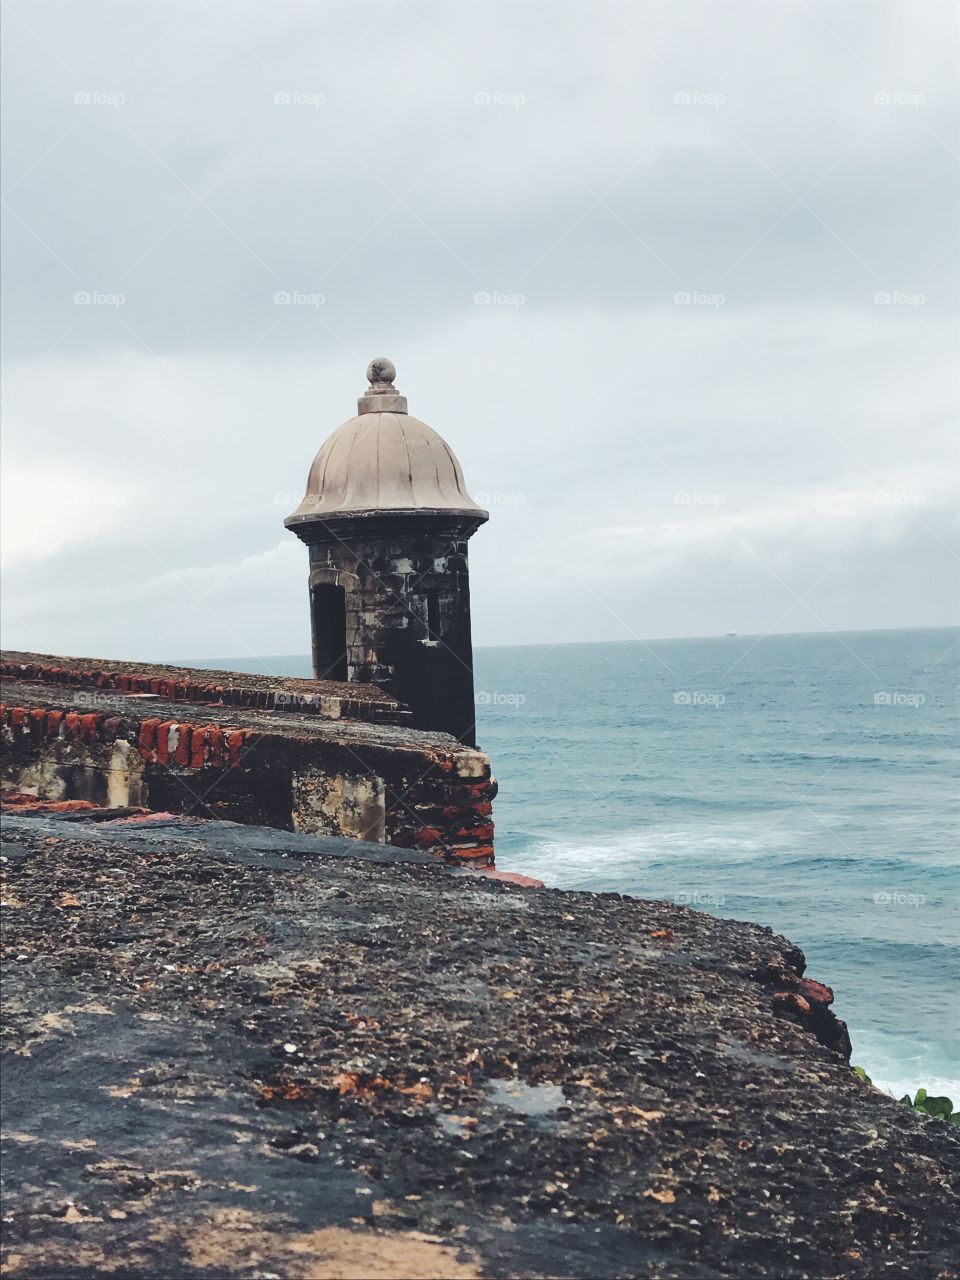 Fort in San Juan, Puerto Rico